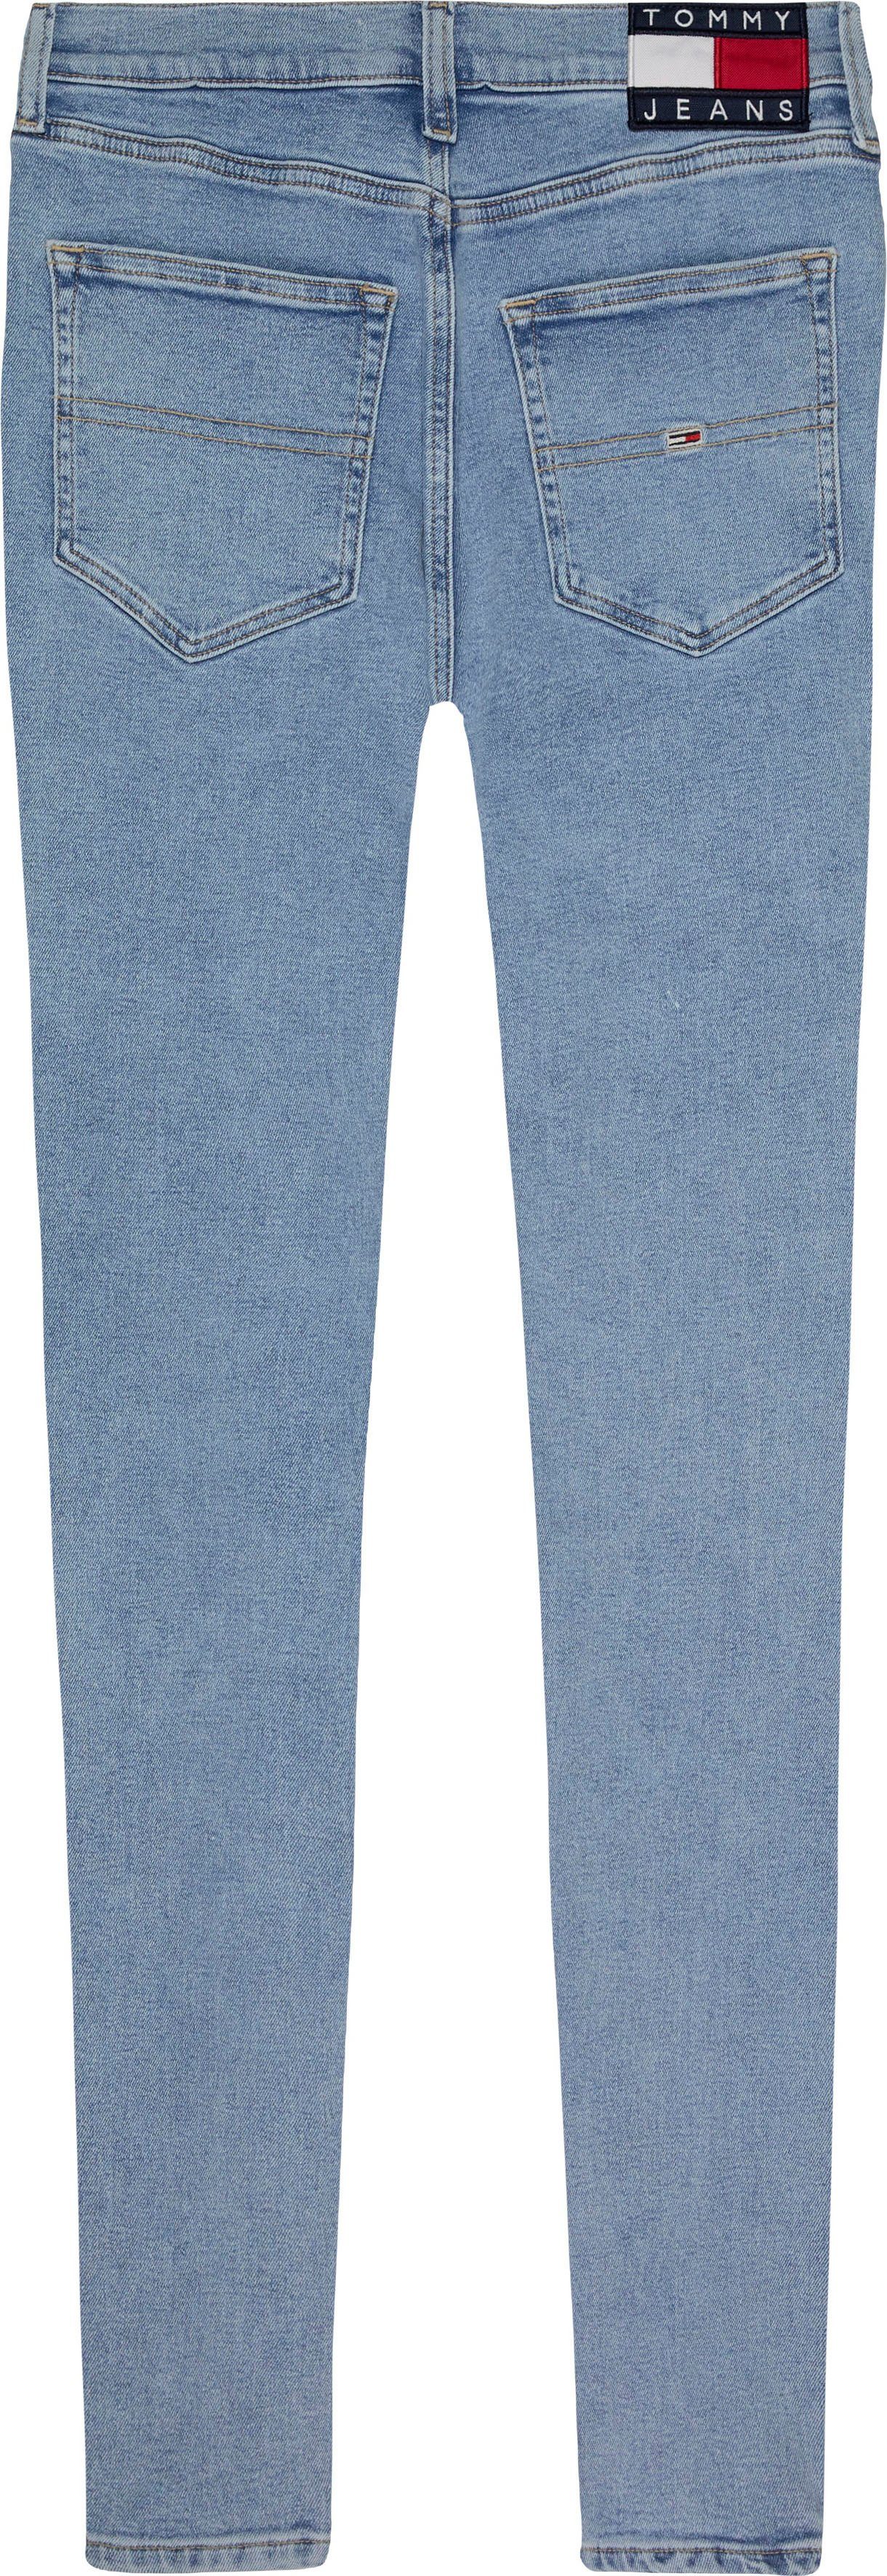 Jeans HR mit SYLVIA Jeans light_denim2 Logobadge SSKN Labelflags CG4 und Skinny-fit-Jeans Tommy